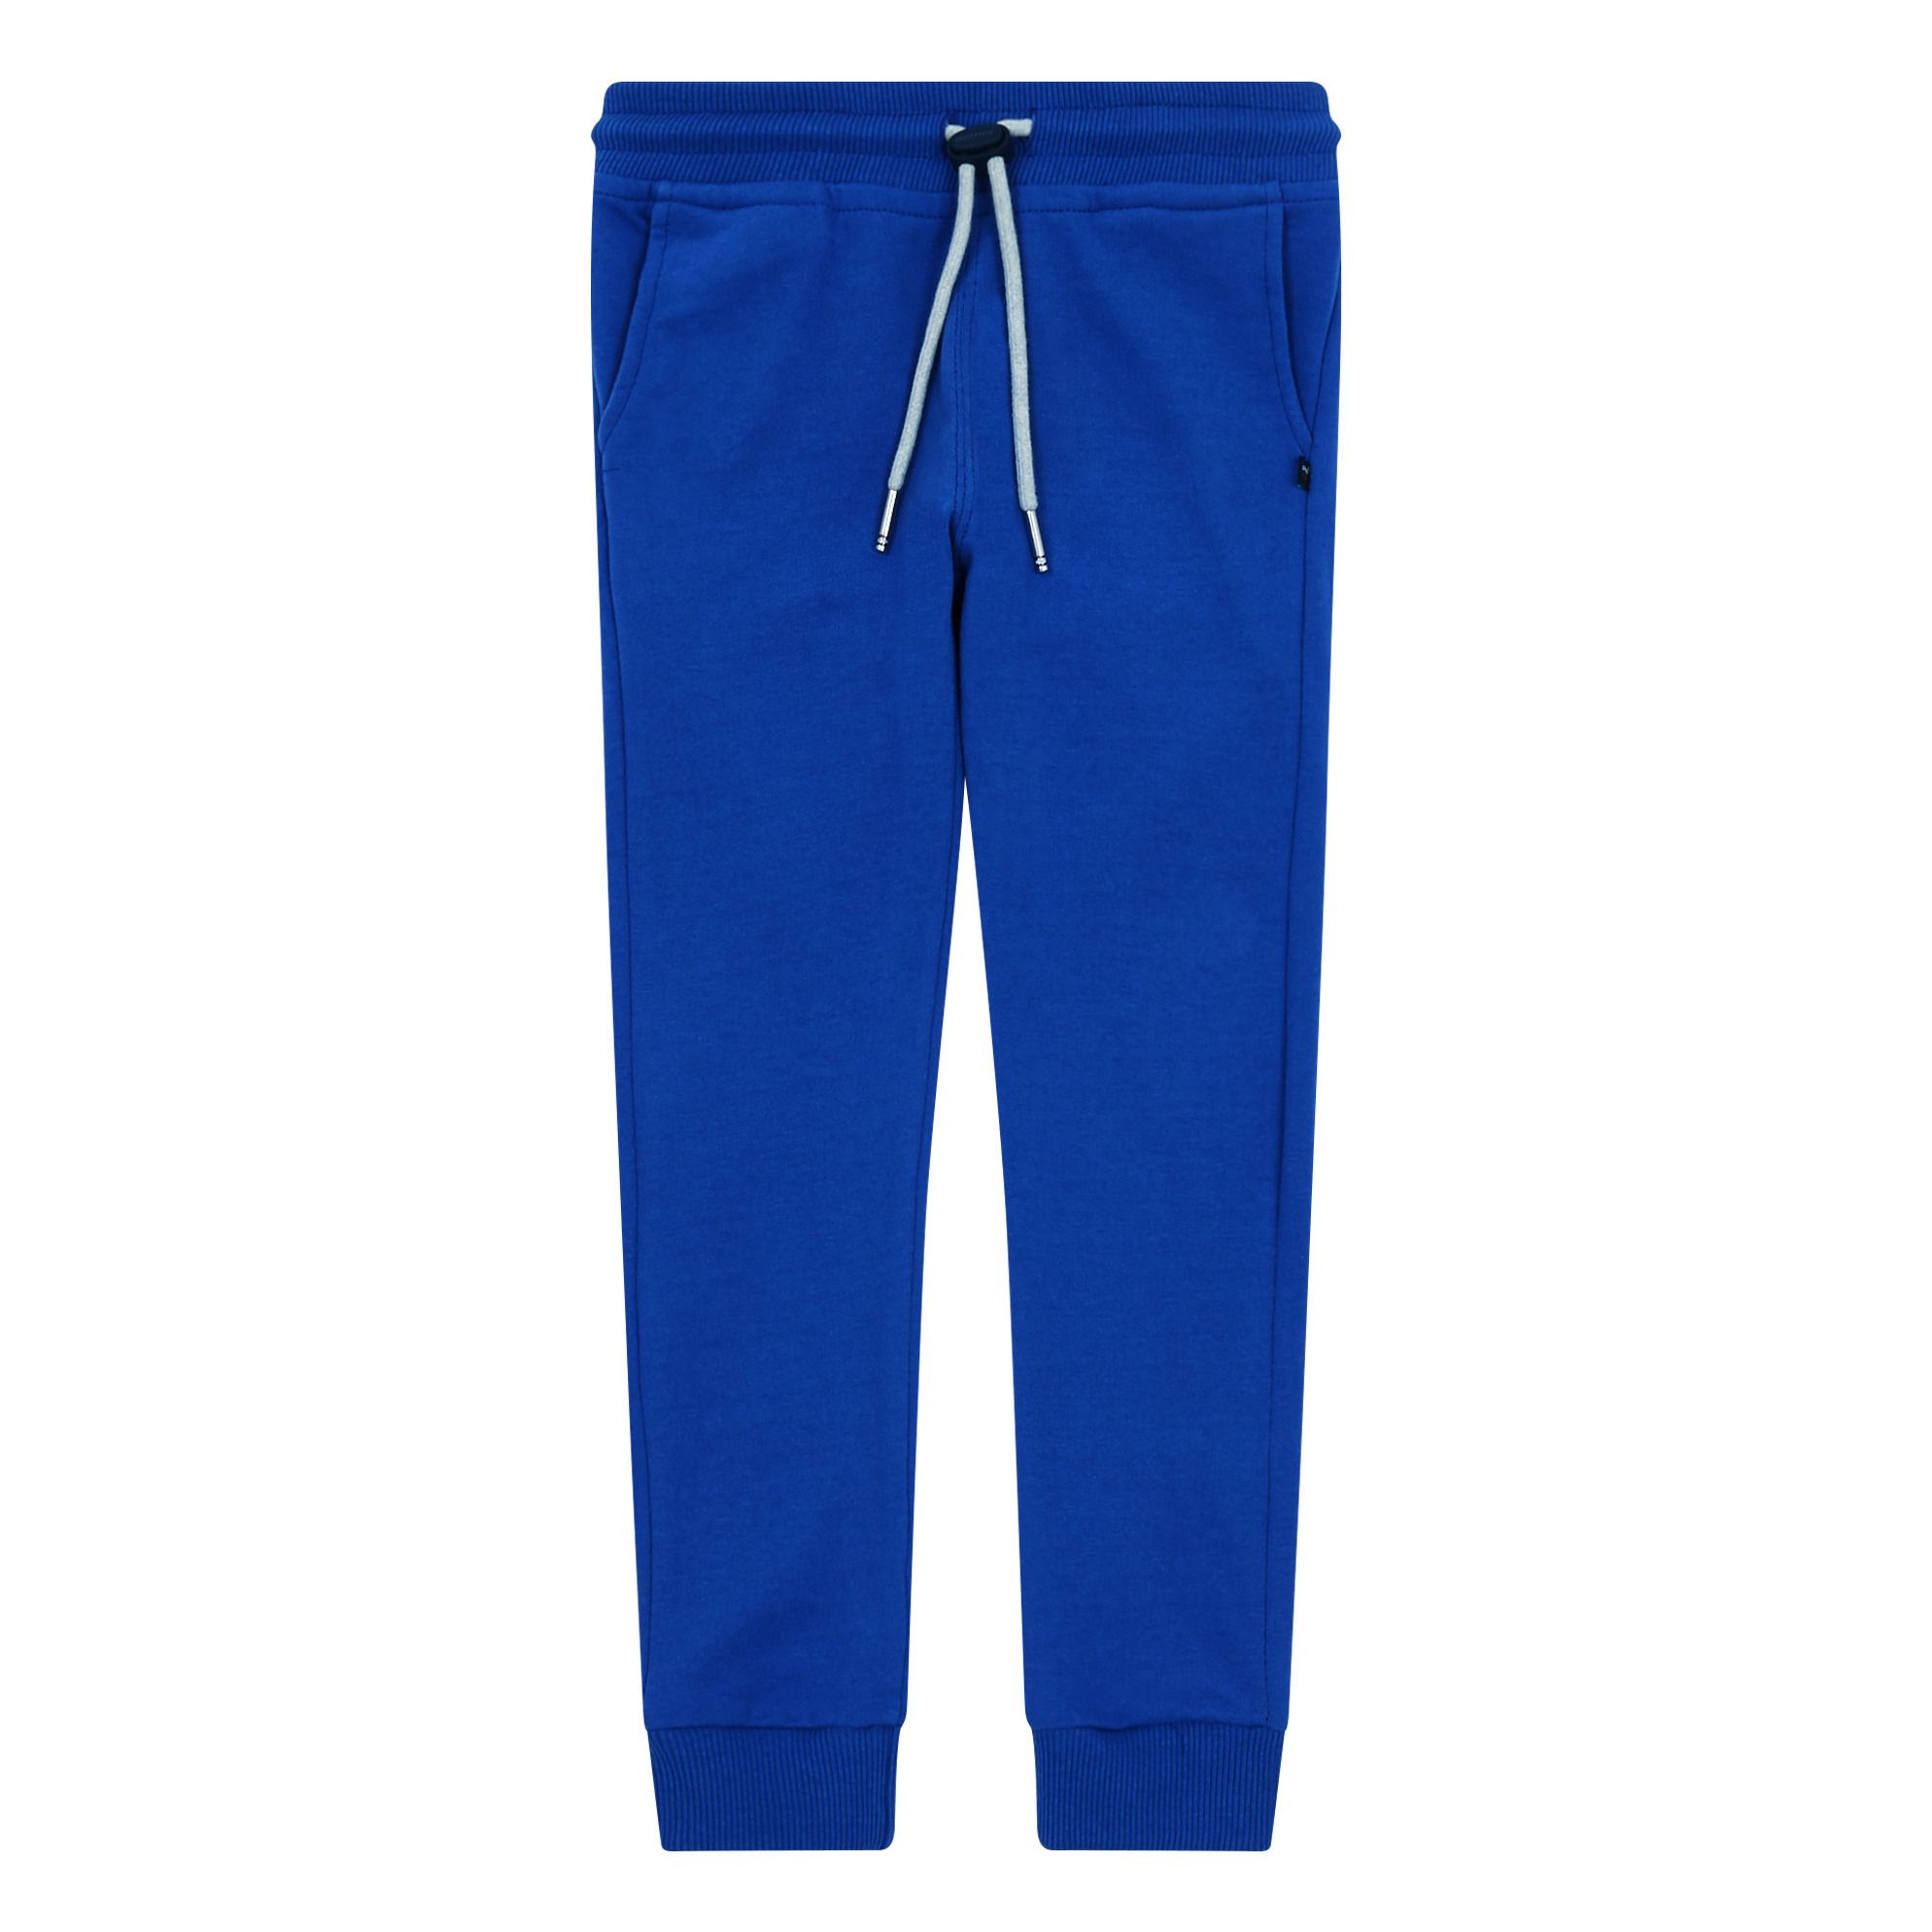 Sweet Pants - Jogger Slim - Fille - Bleu